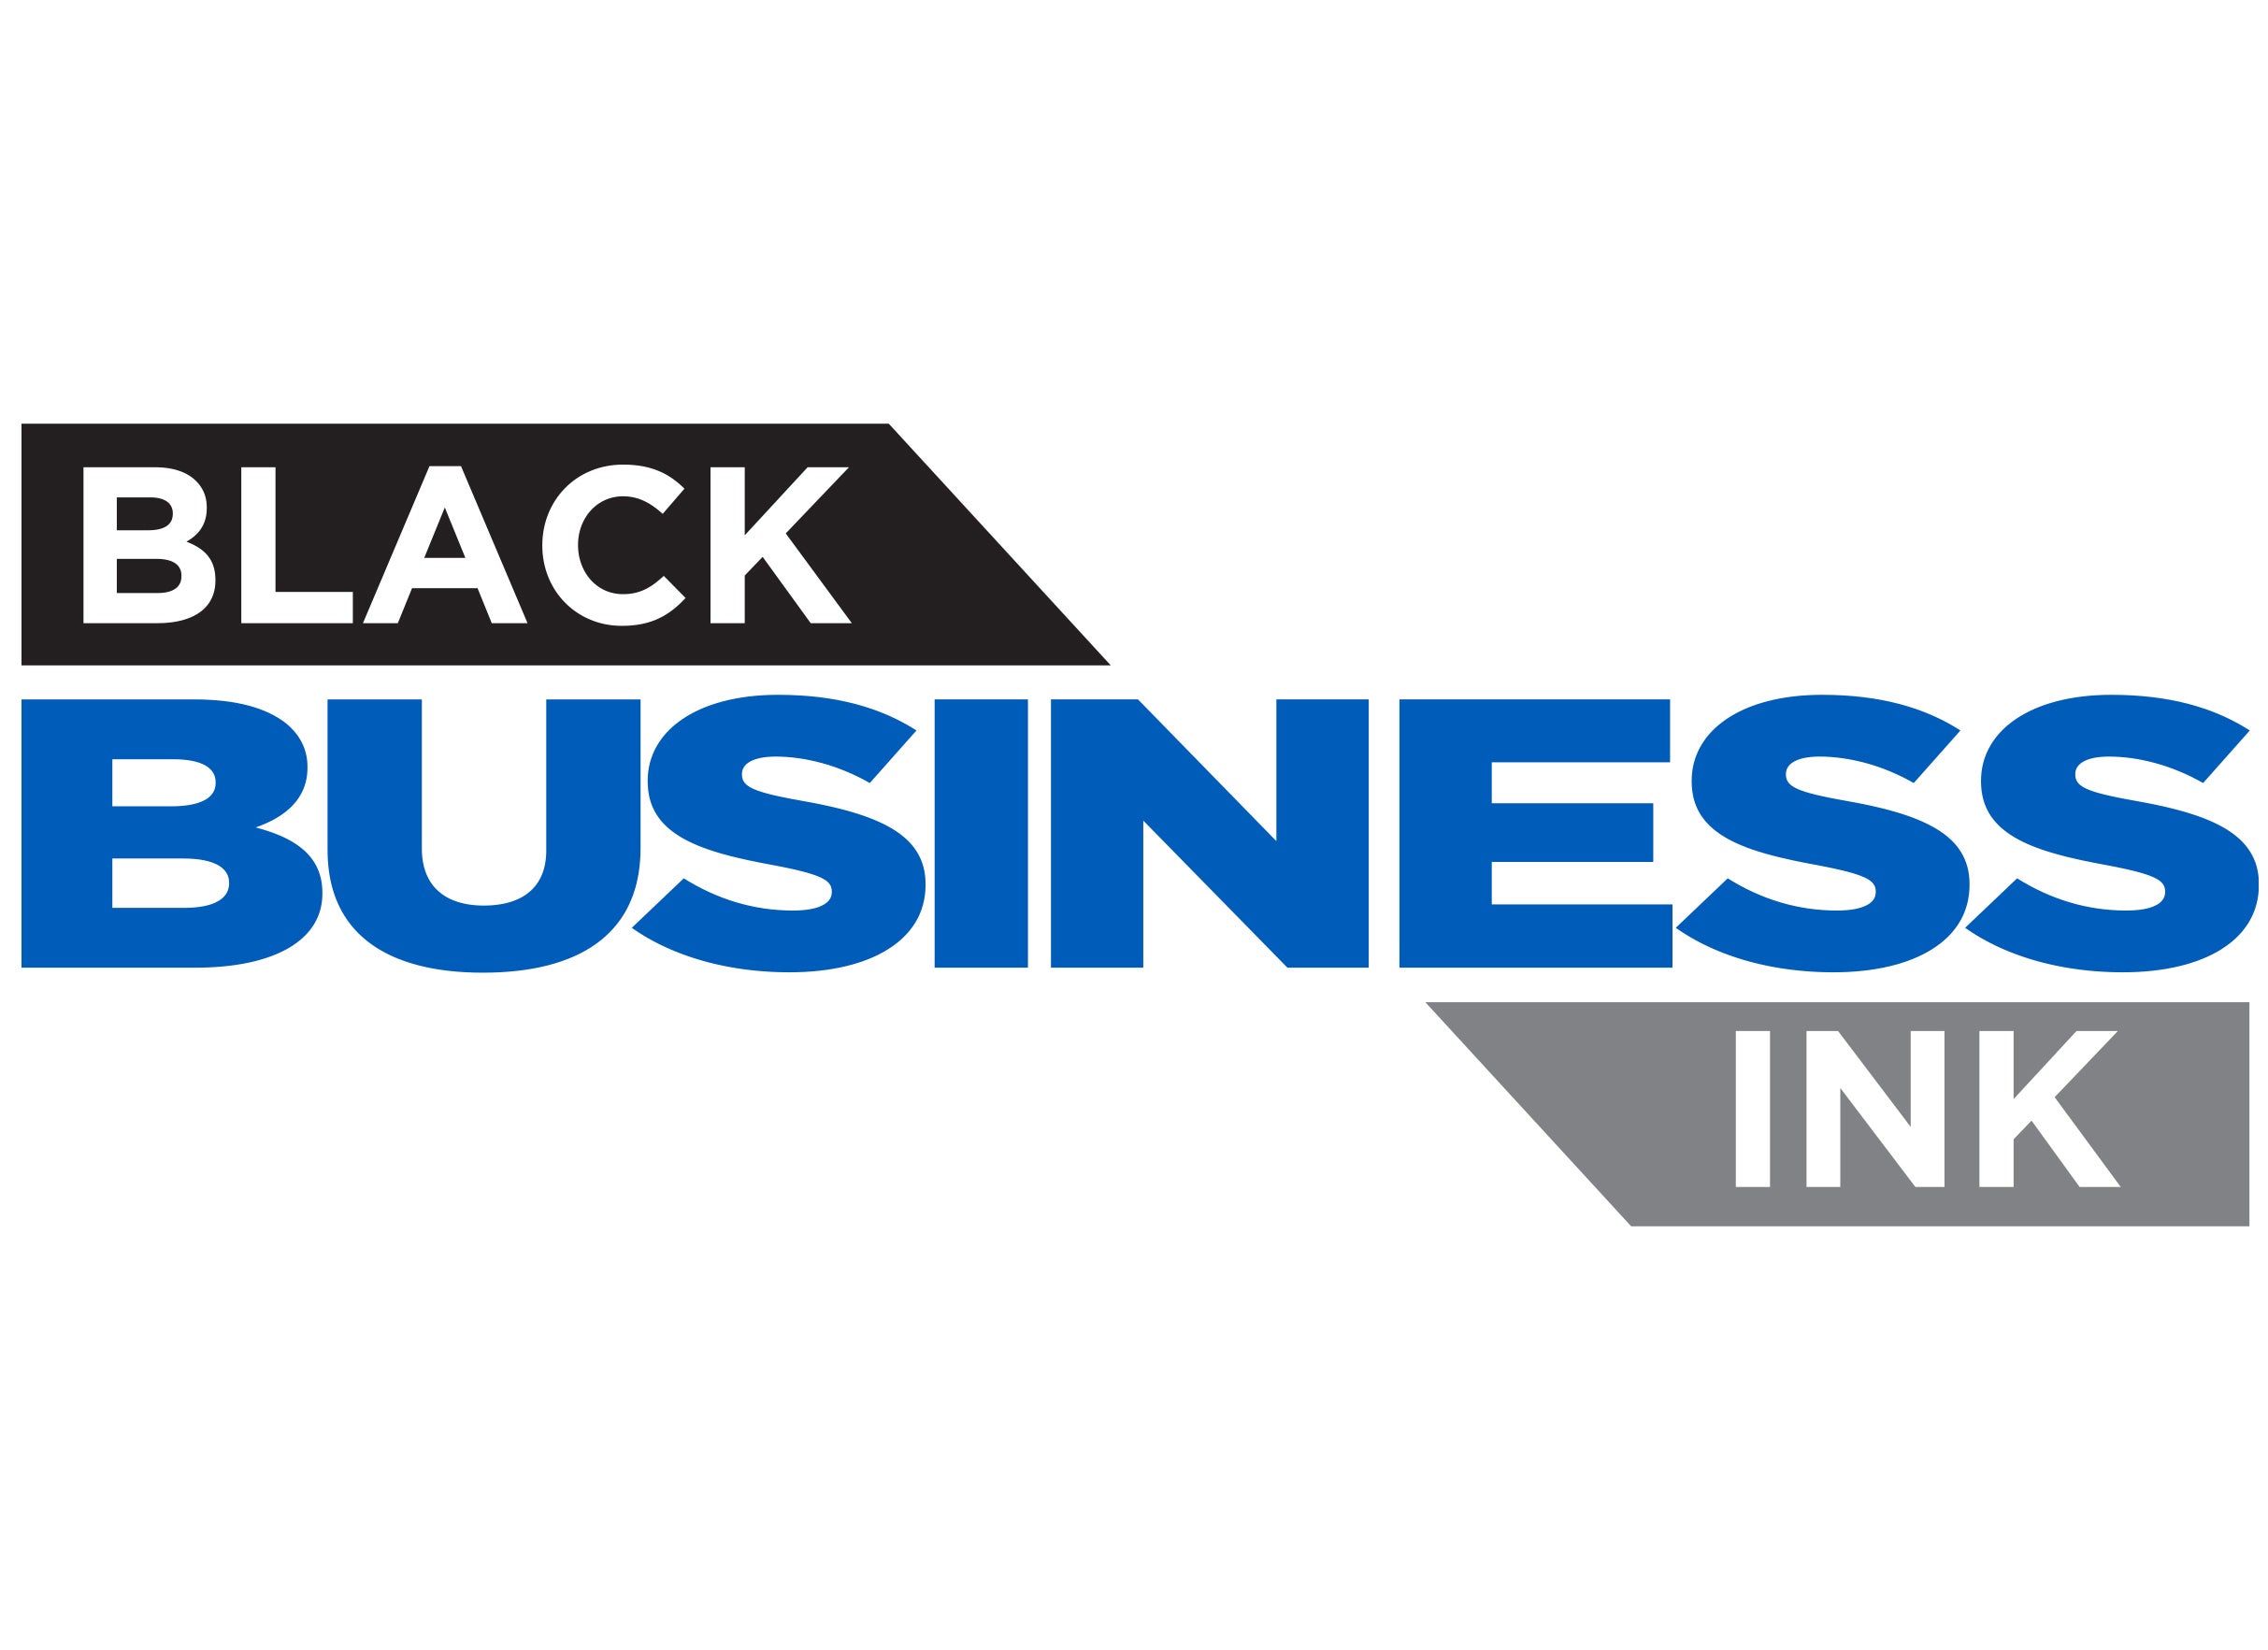 Black Business Ink in Greensboro promo photo for POWER 100 Splash Sale presale offer code